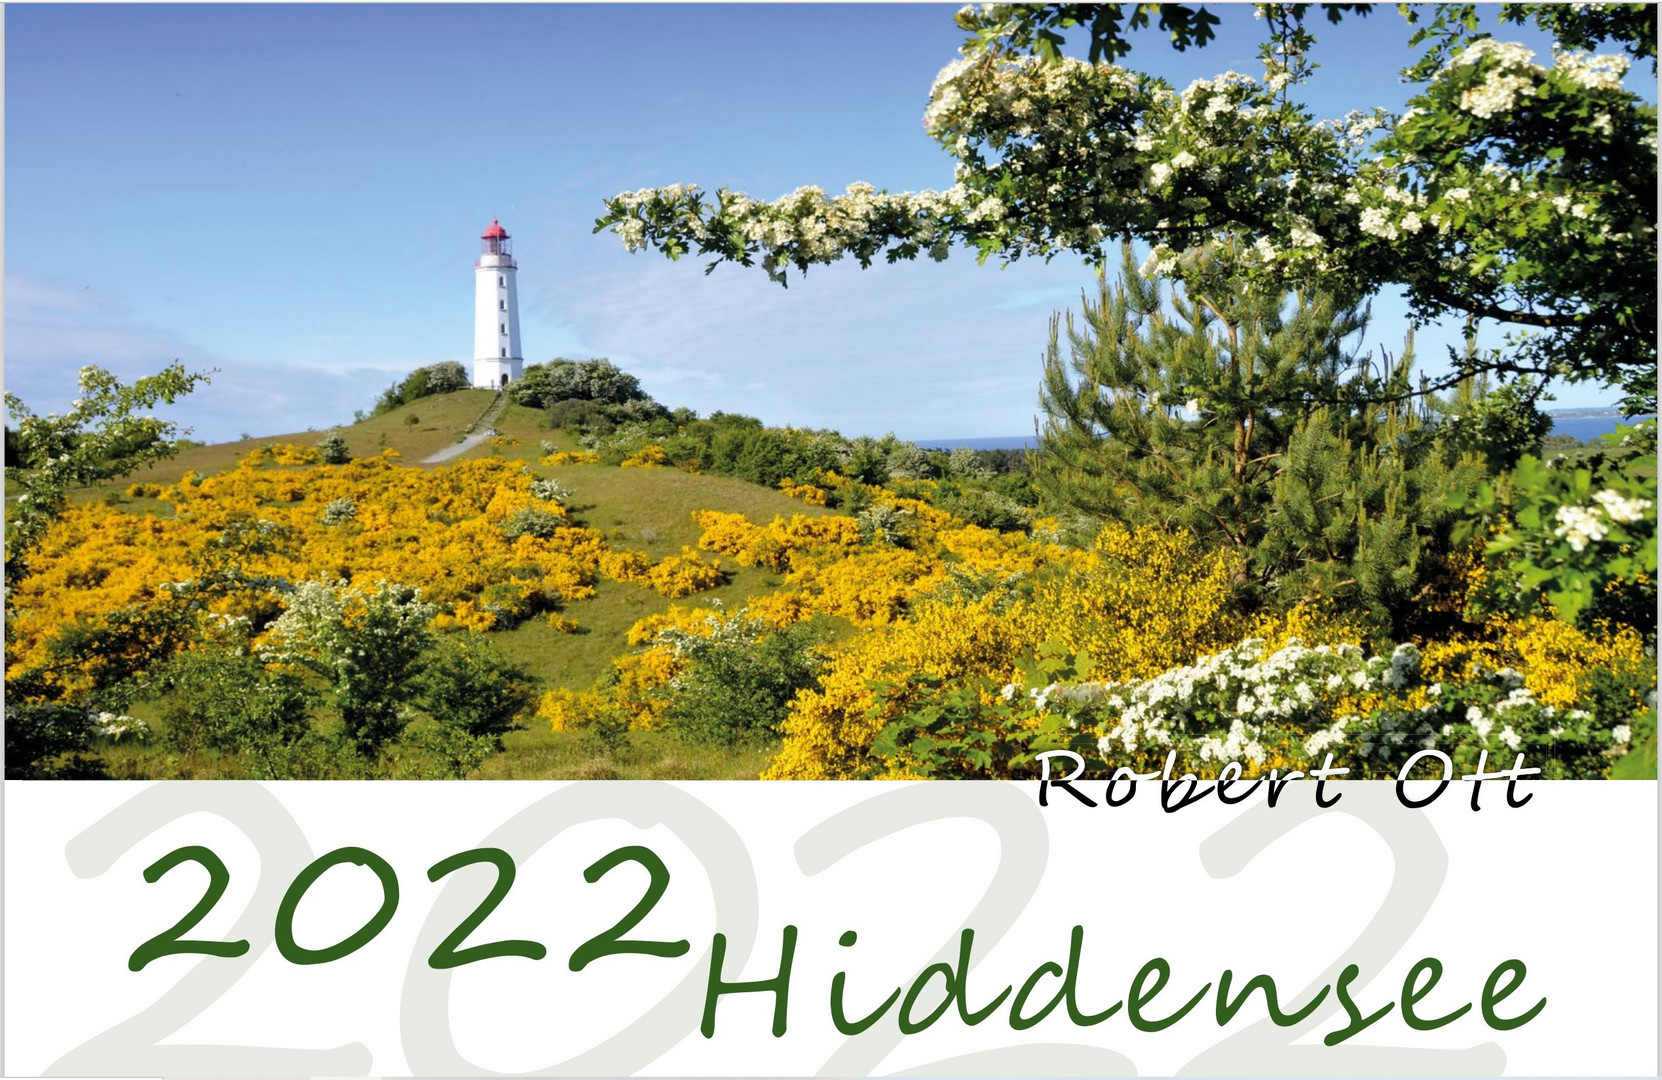 Hiddensee-Kalender 2022